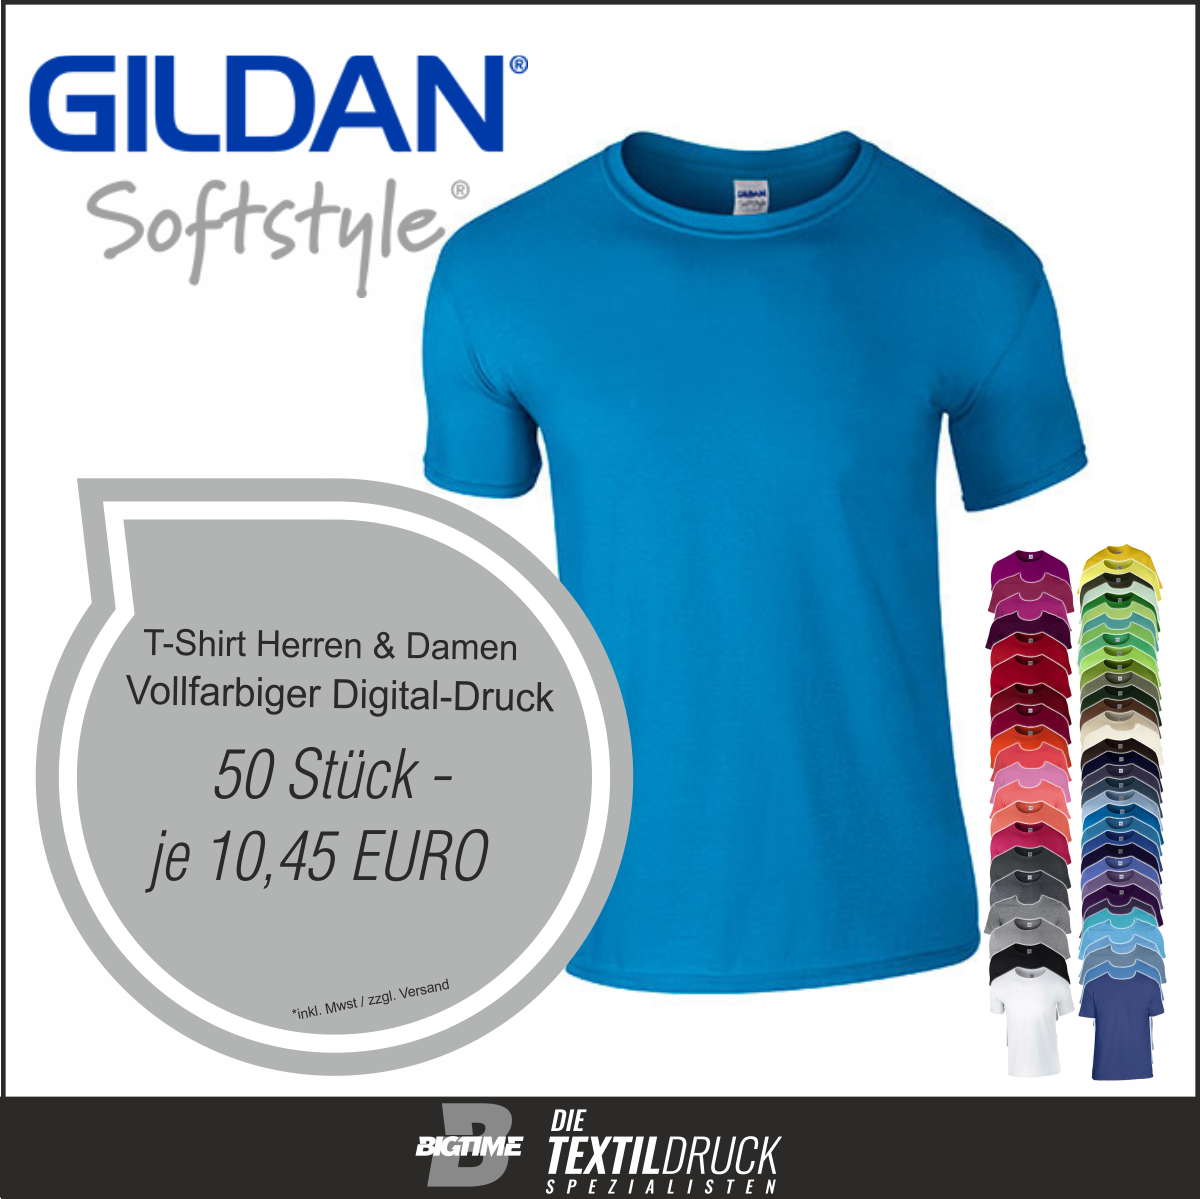 Gildan Softstyle T-Shirts farbig einseitig, vollfarbiger Druck / 50 Stück